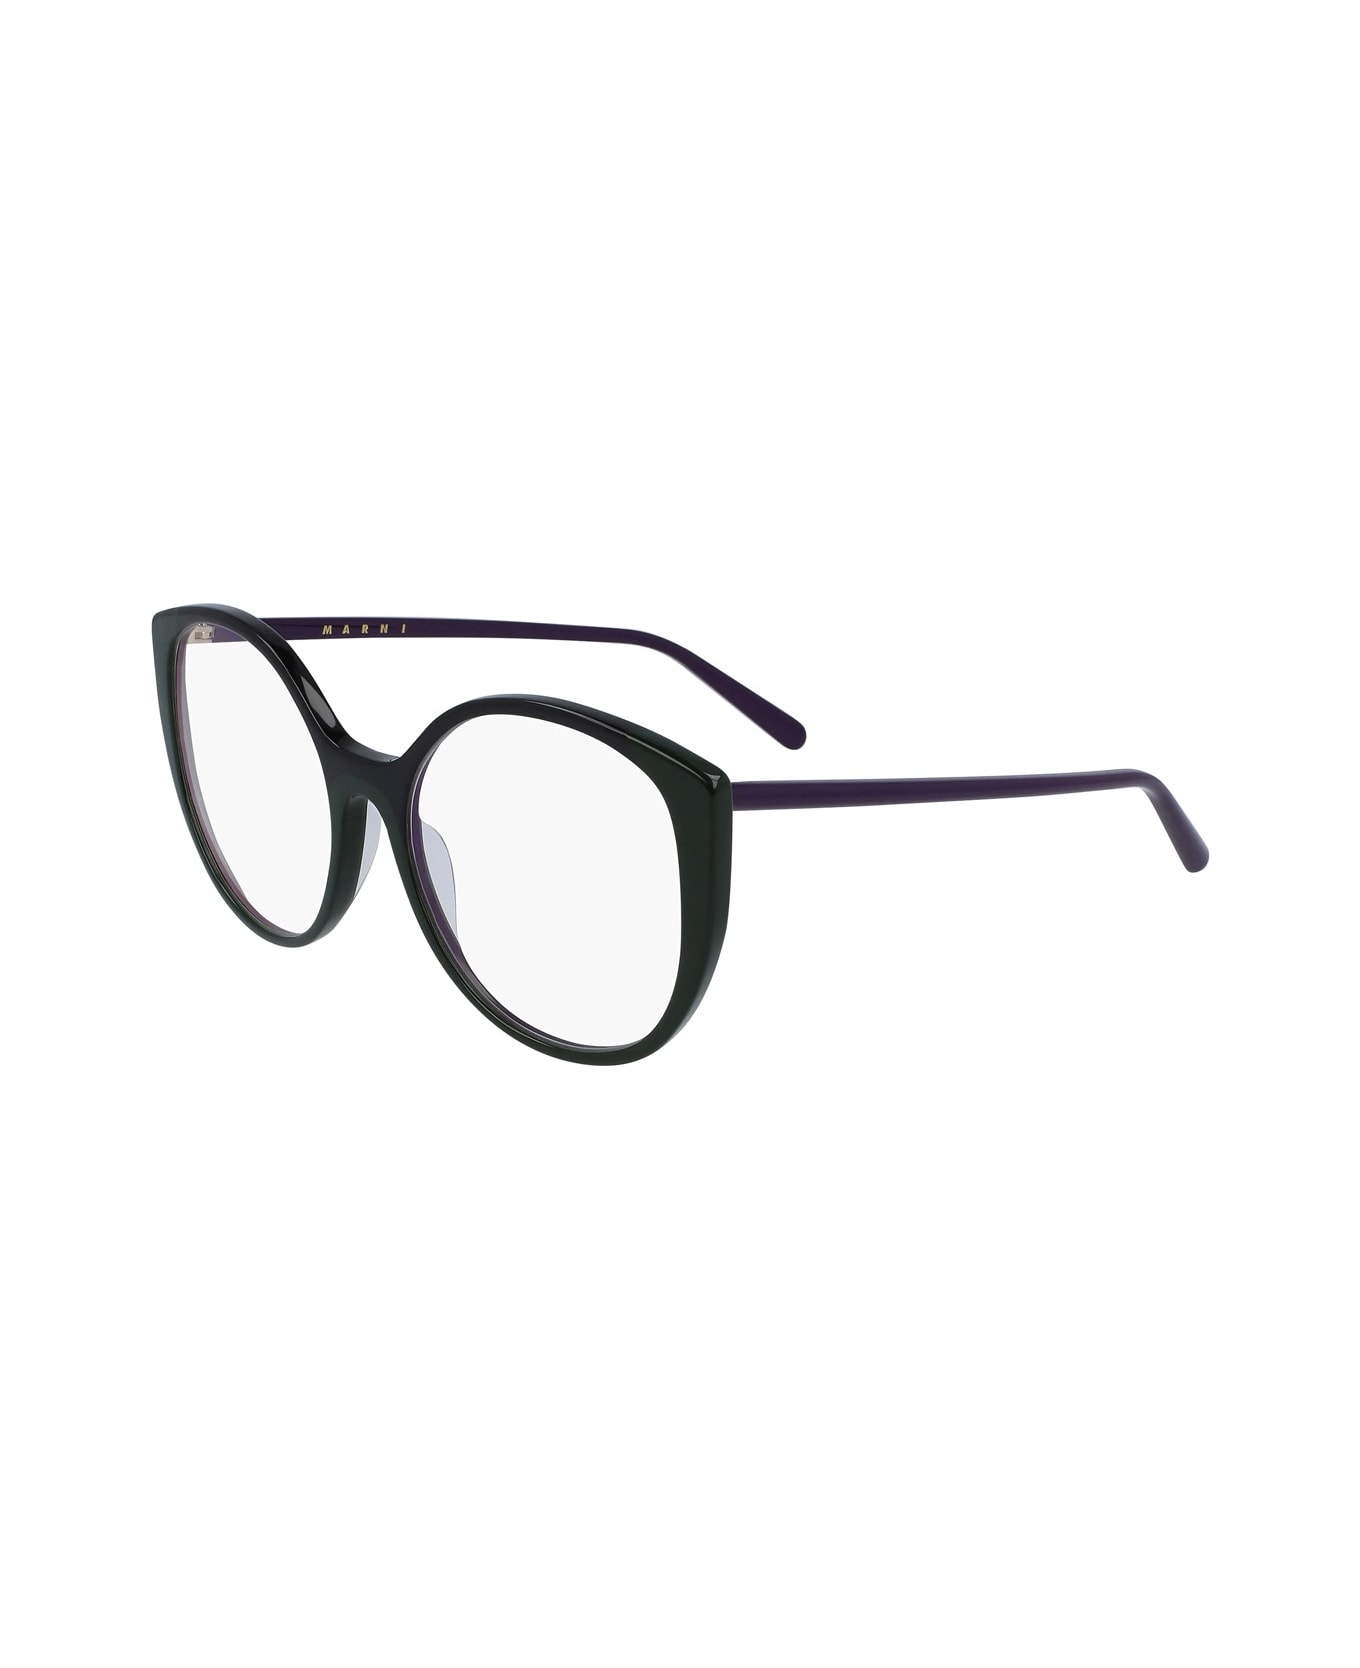 Marni Eyewear Me2637 Glasses - Verde アイウェア